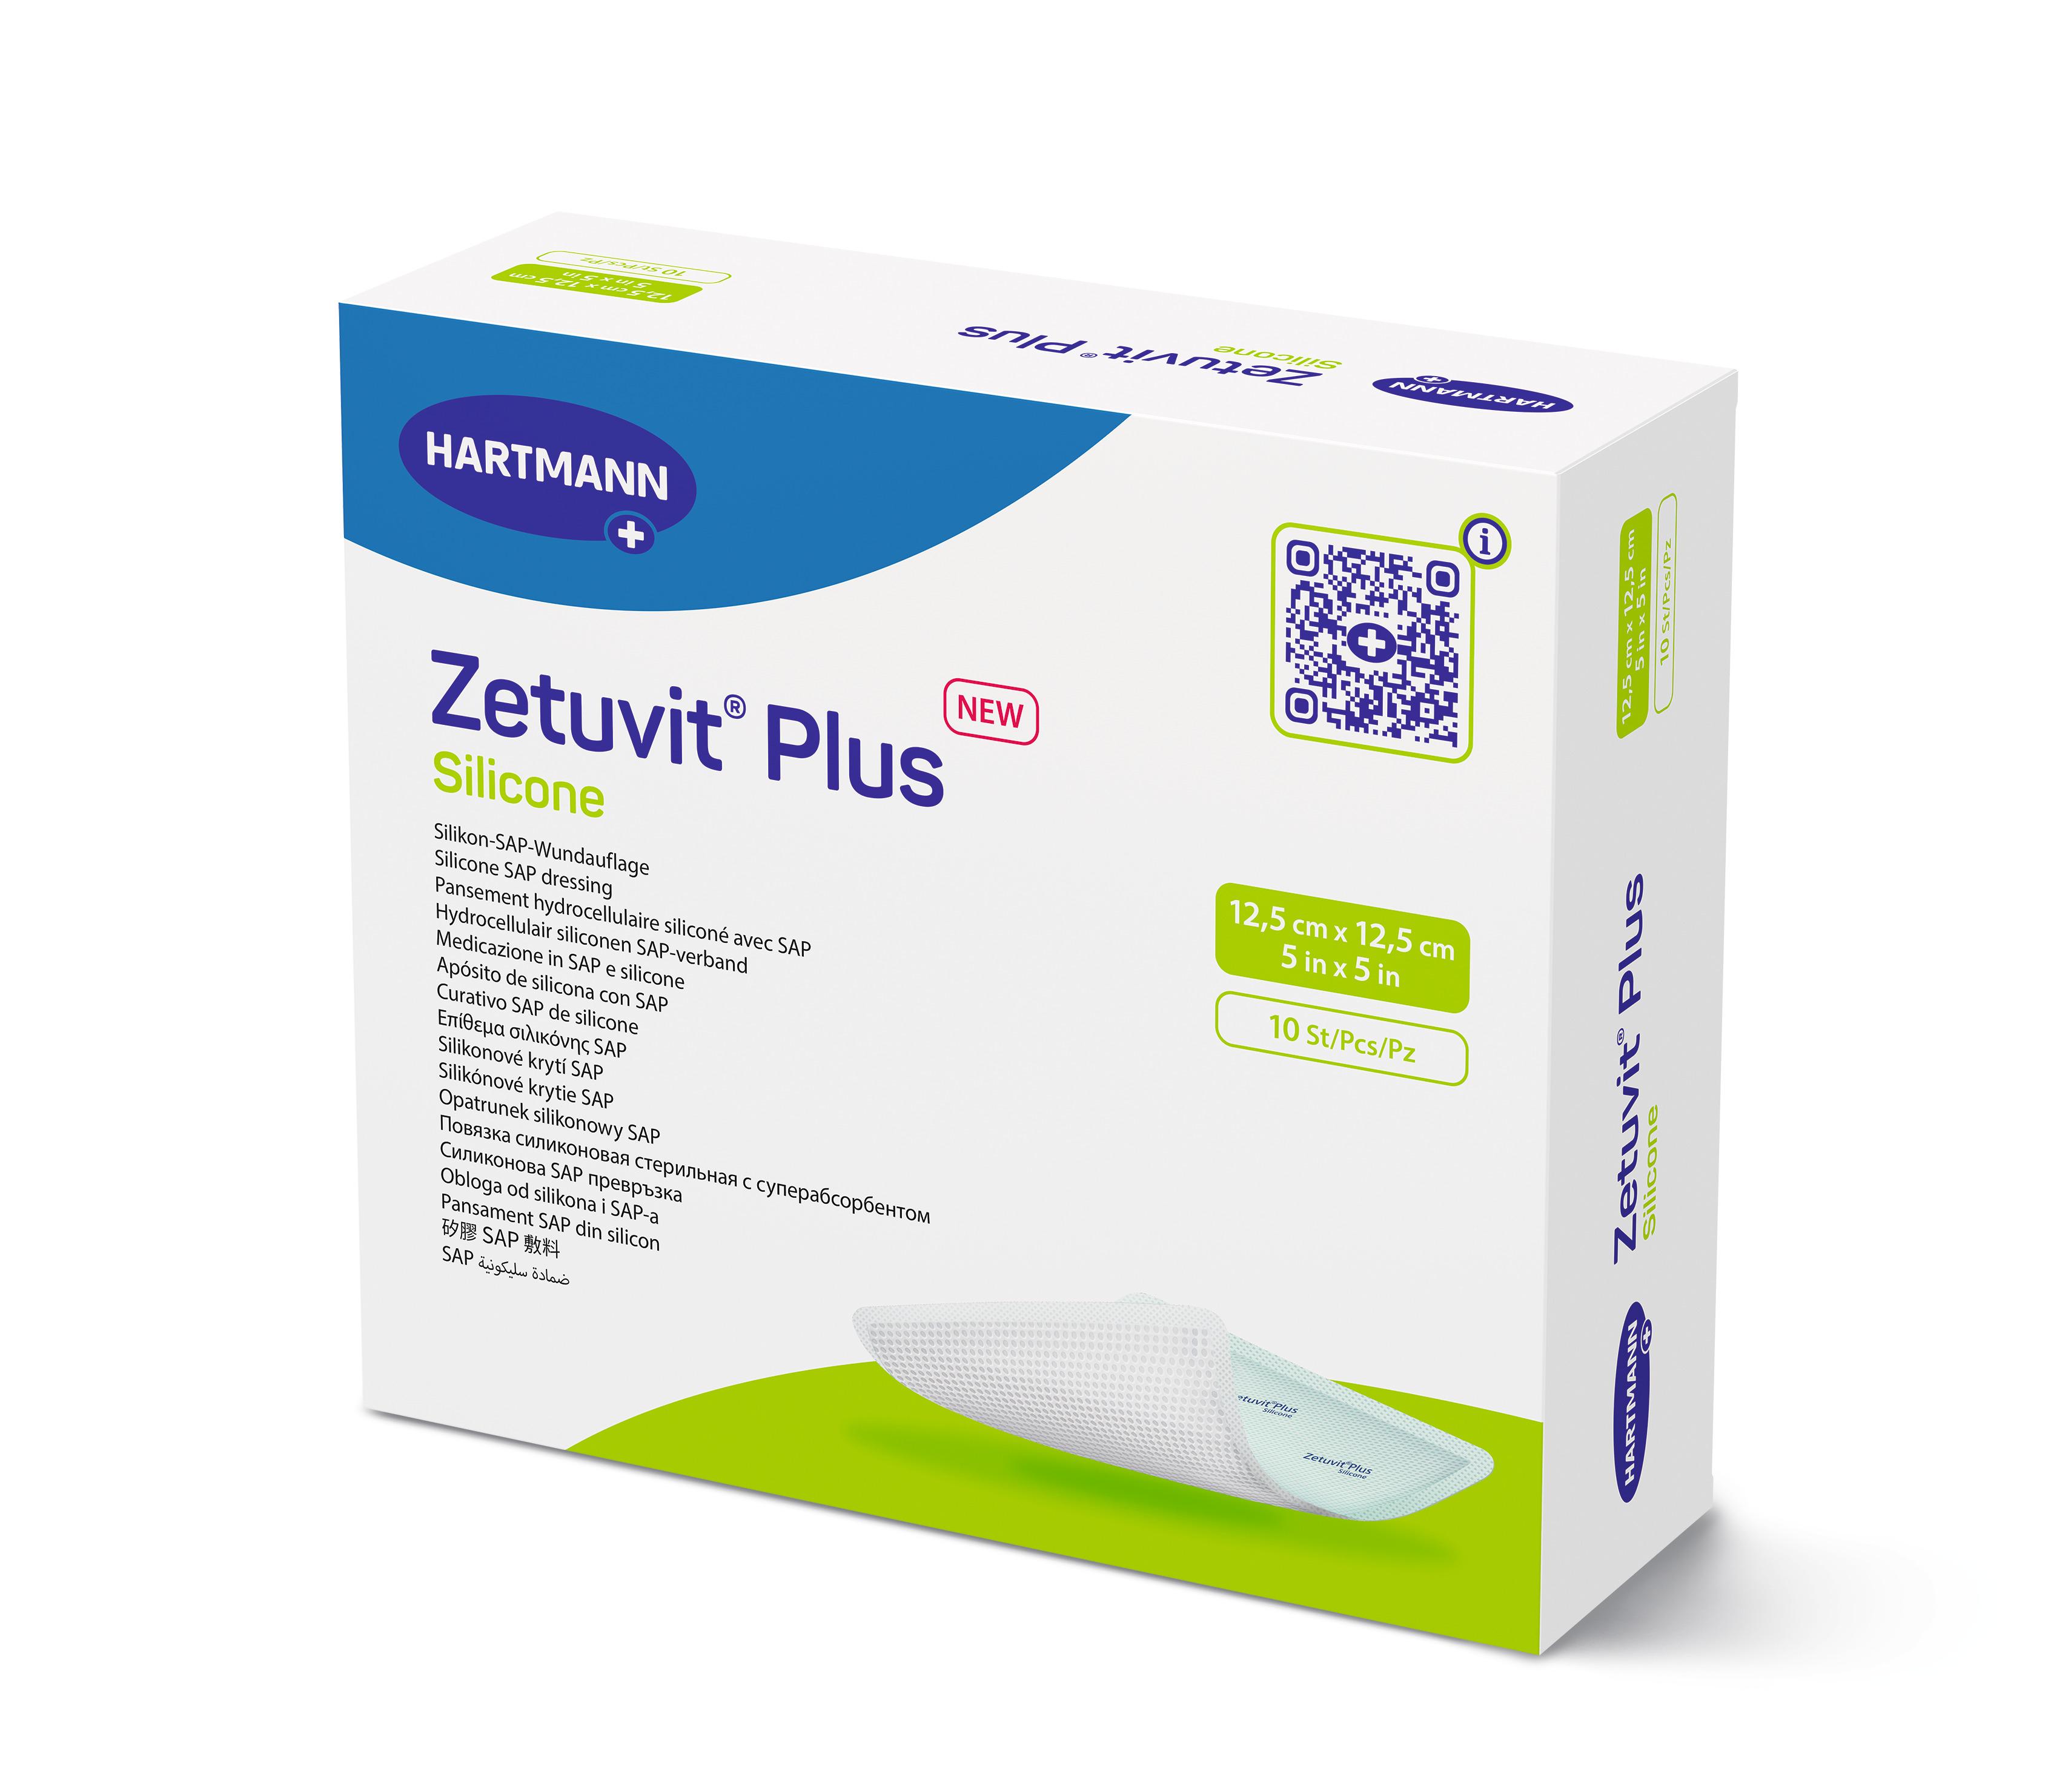 Zetuvit® Plus Silicone